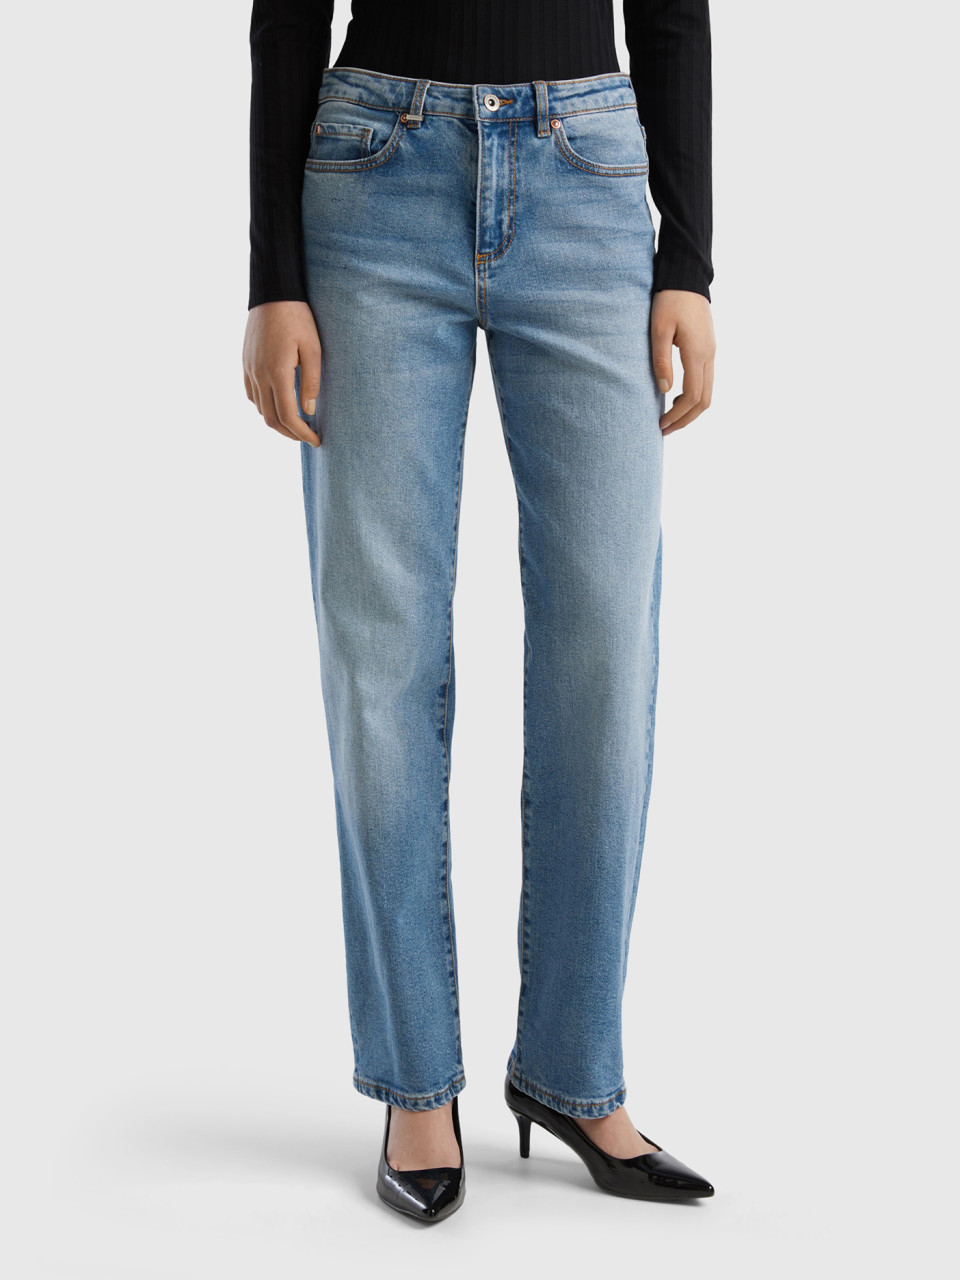 Benetton, Jeans Straight-fit, Hellblau, female